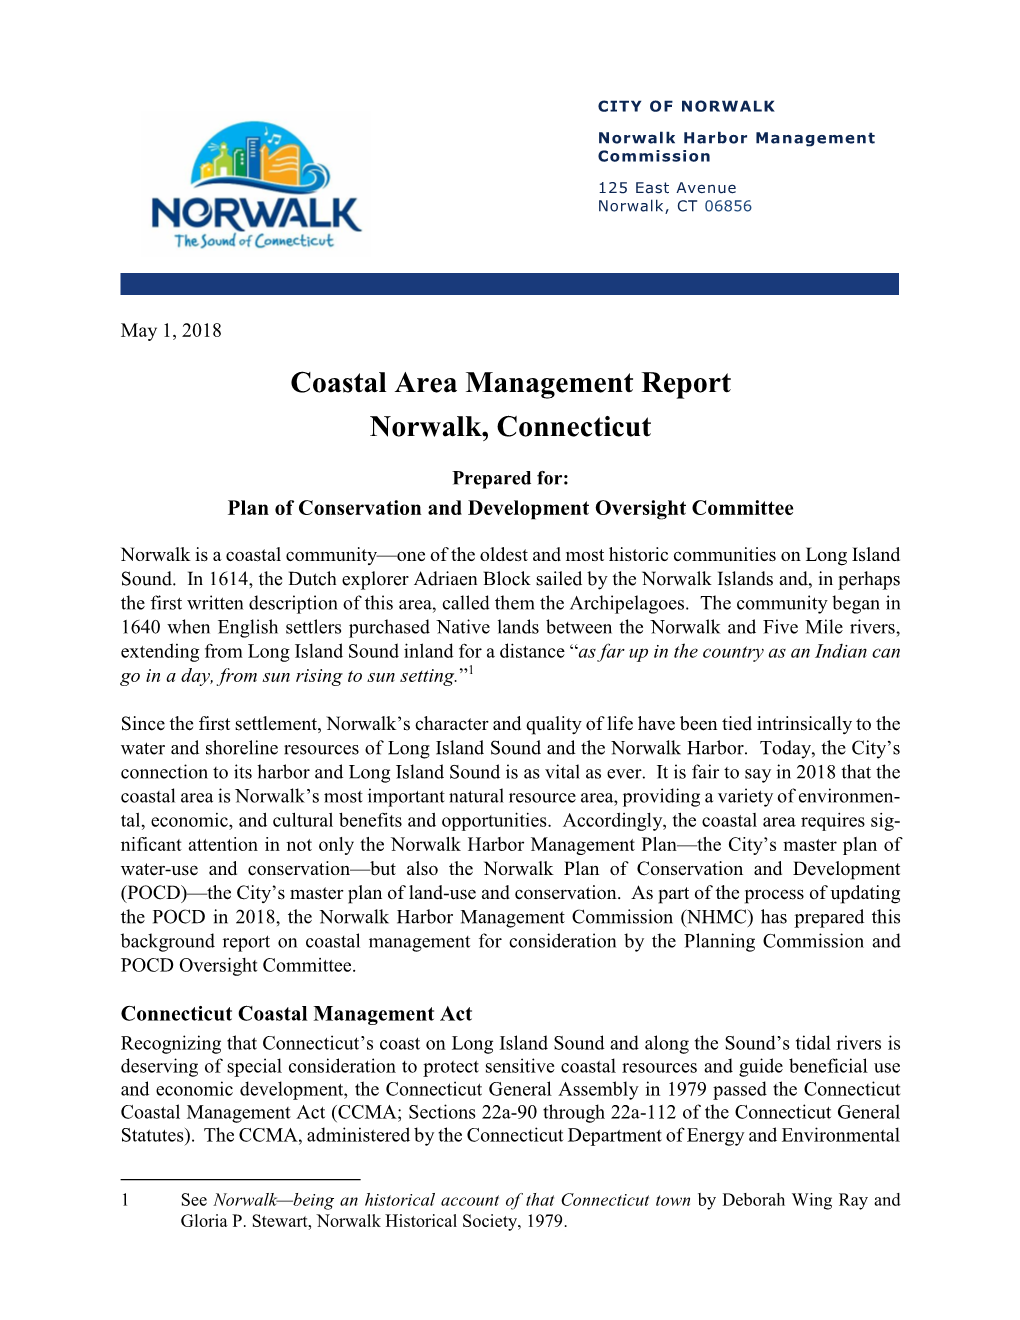 Coastal Area Management Report Norwalk, Connecticut